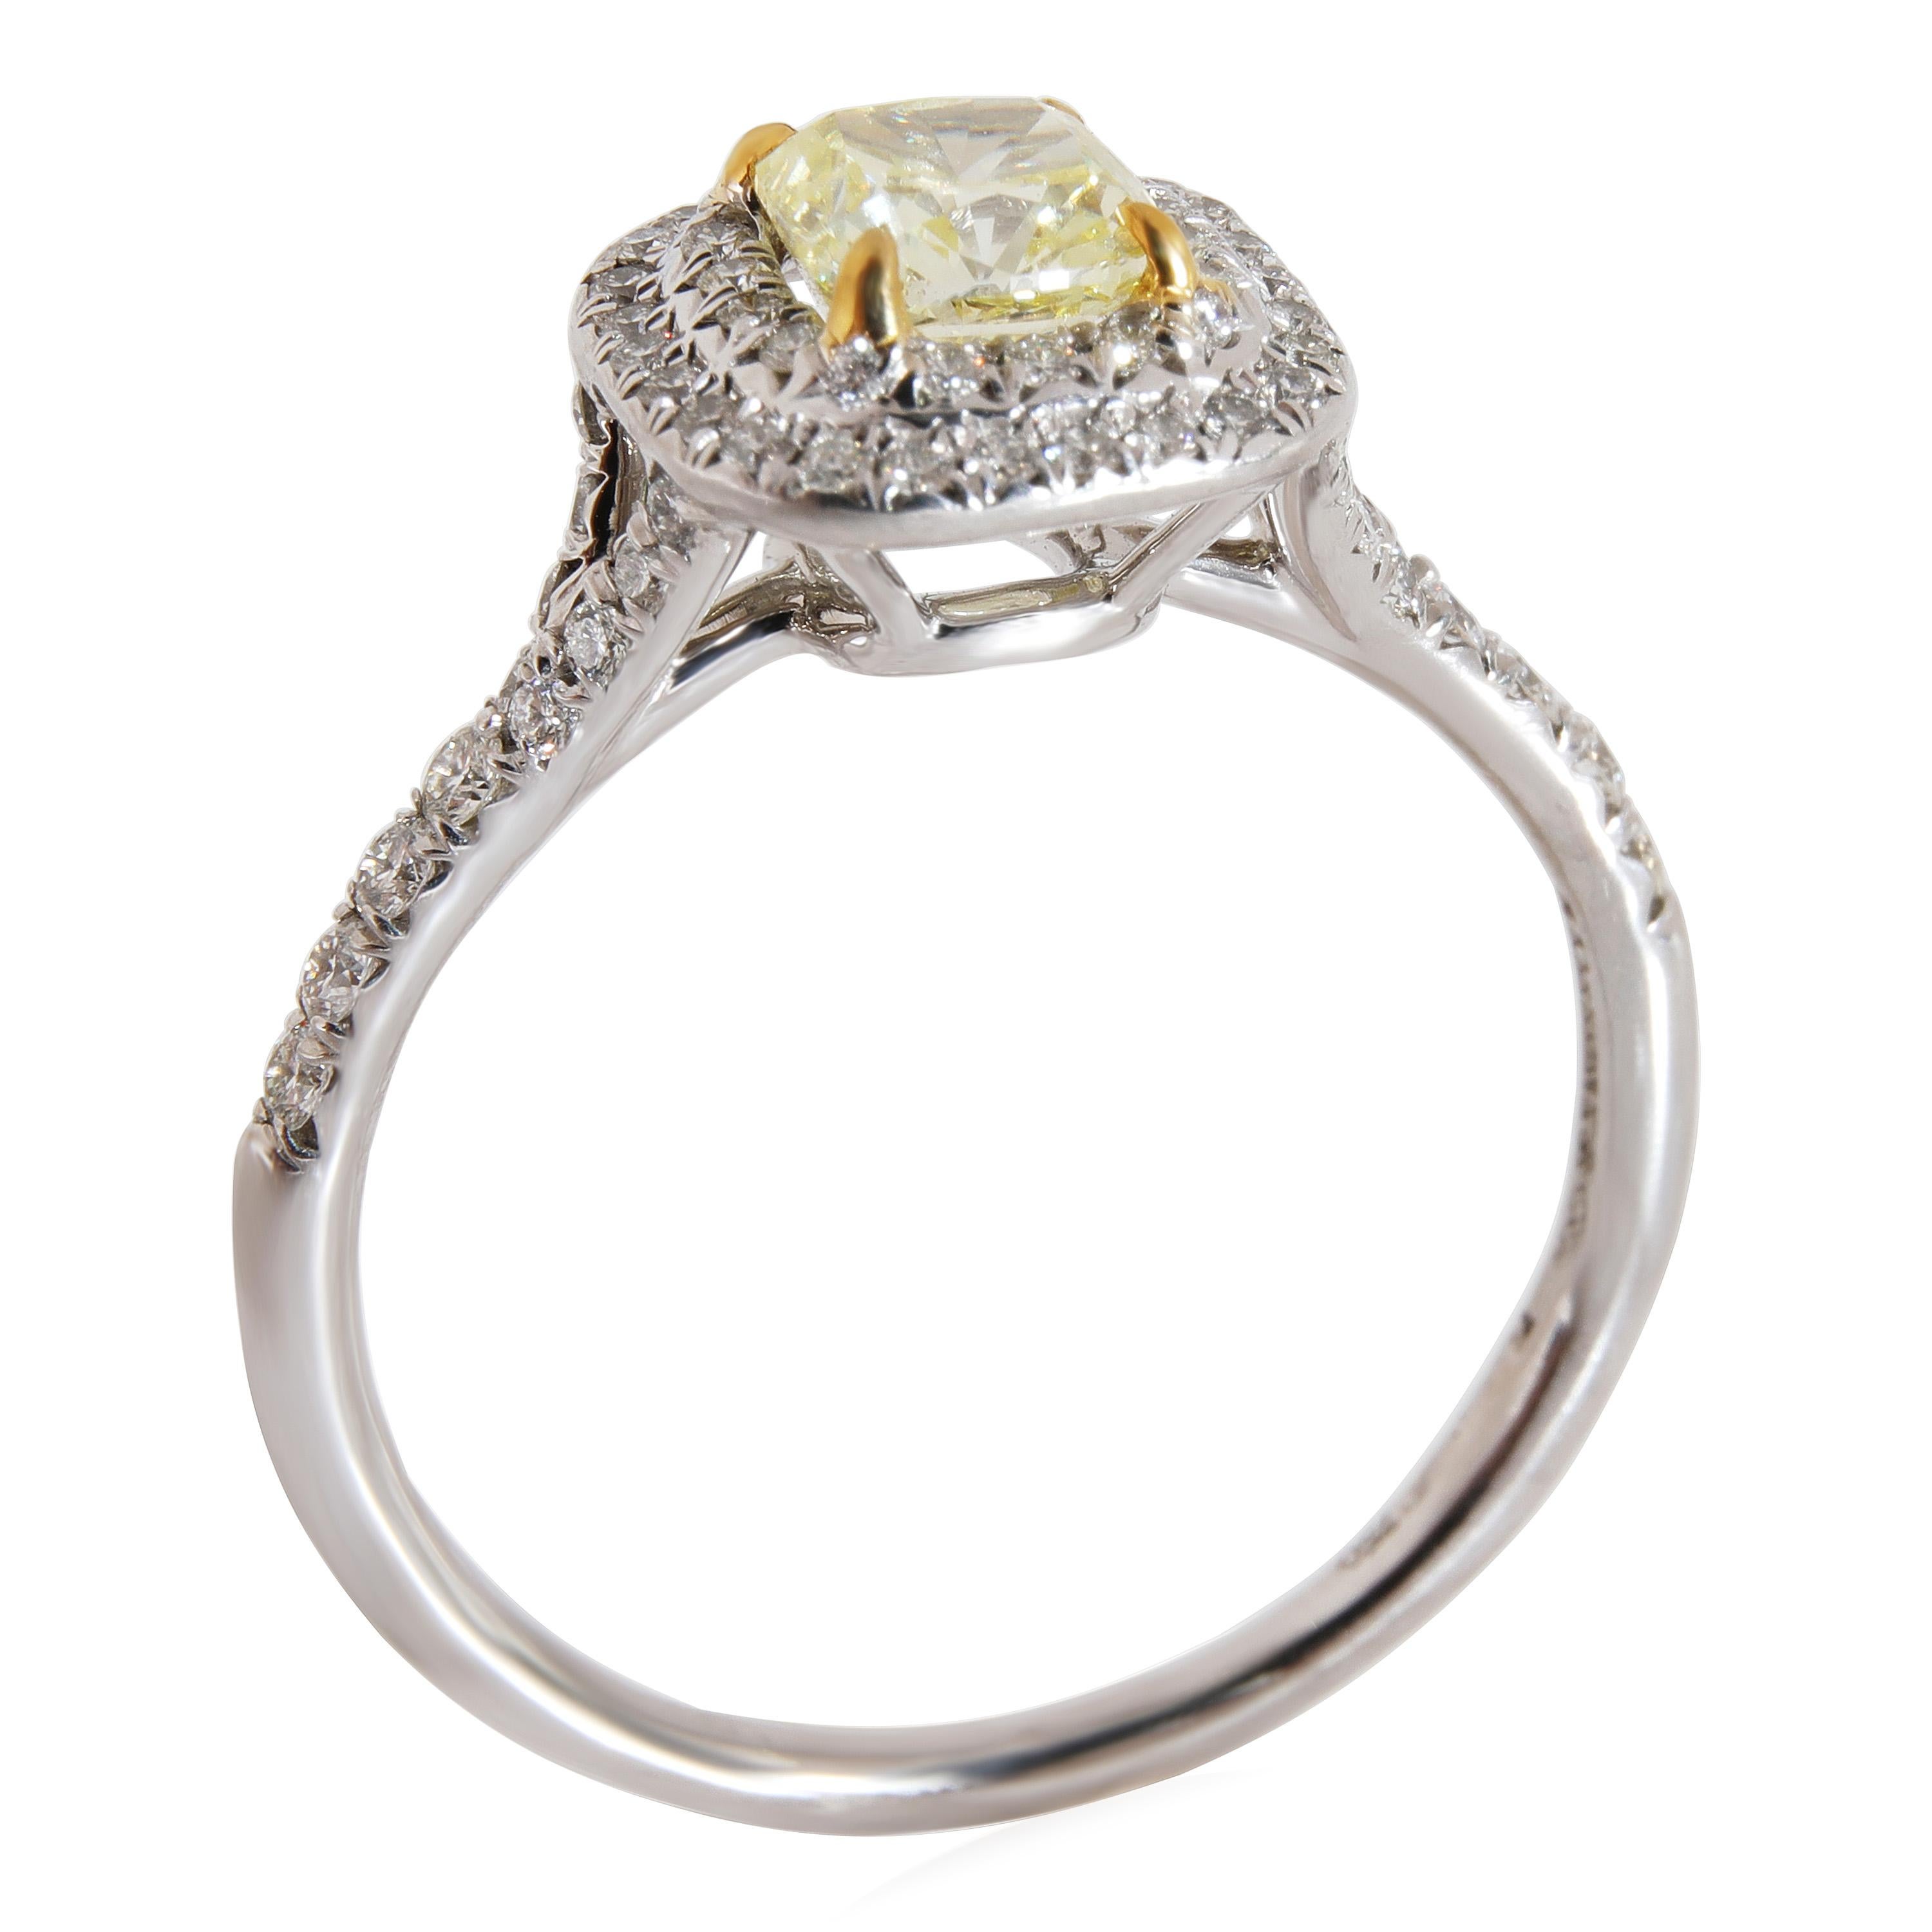 Women's Tiffany & Co. Soleste Halo Diamond Engagement Ring in 18k Yellow Gold 1.03 Ctw